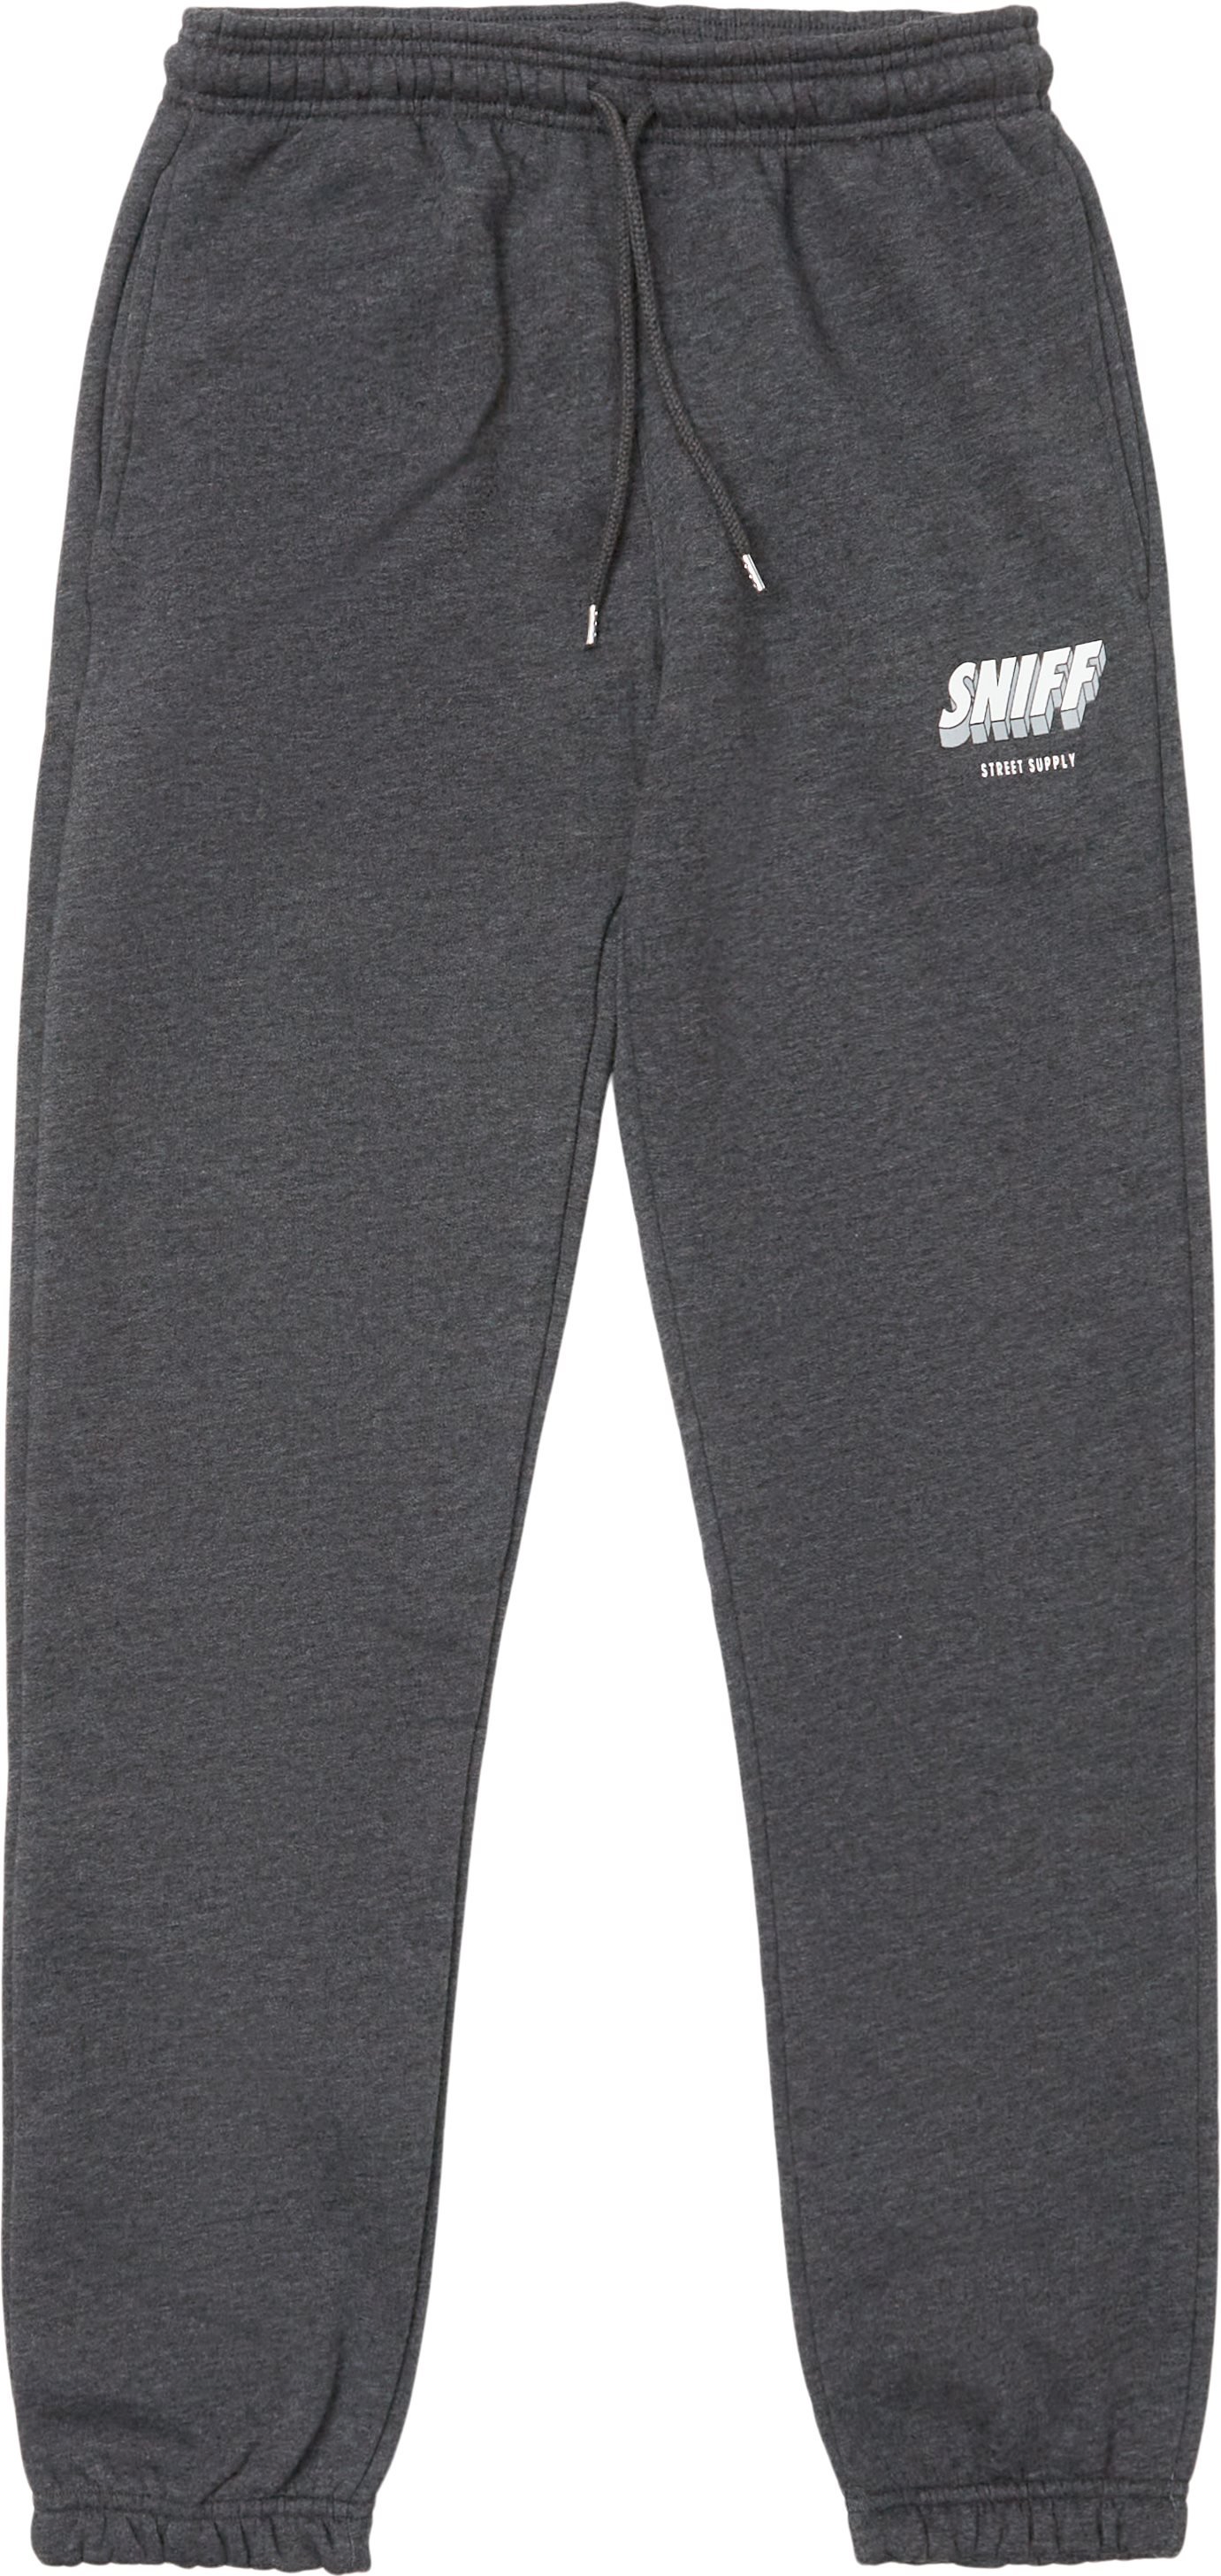 Le Roy Sweatpants - Trousers - Regular fit - Grey